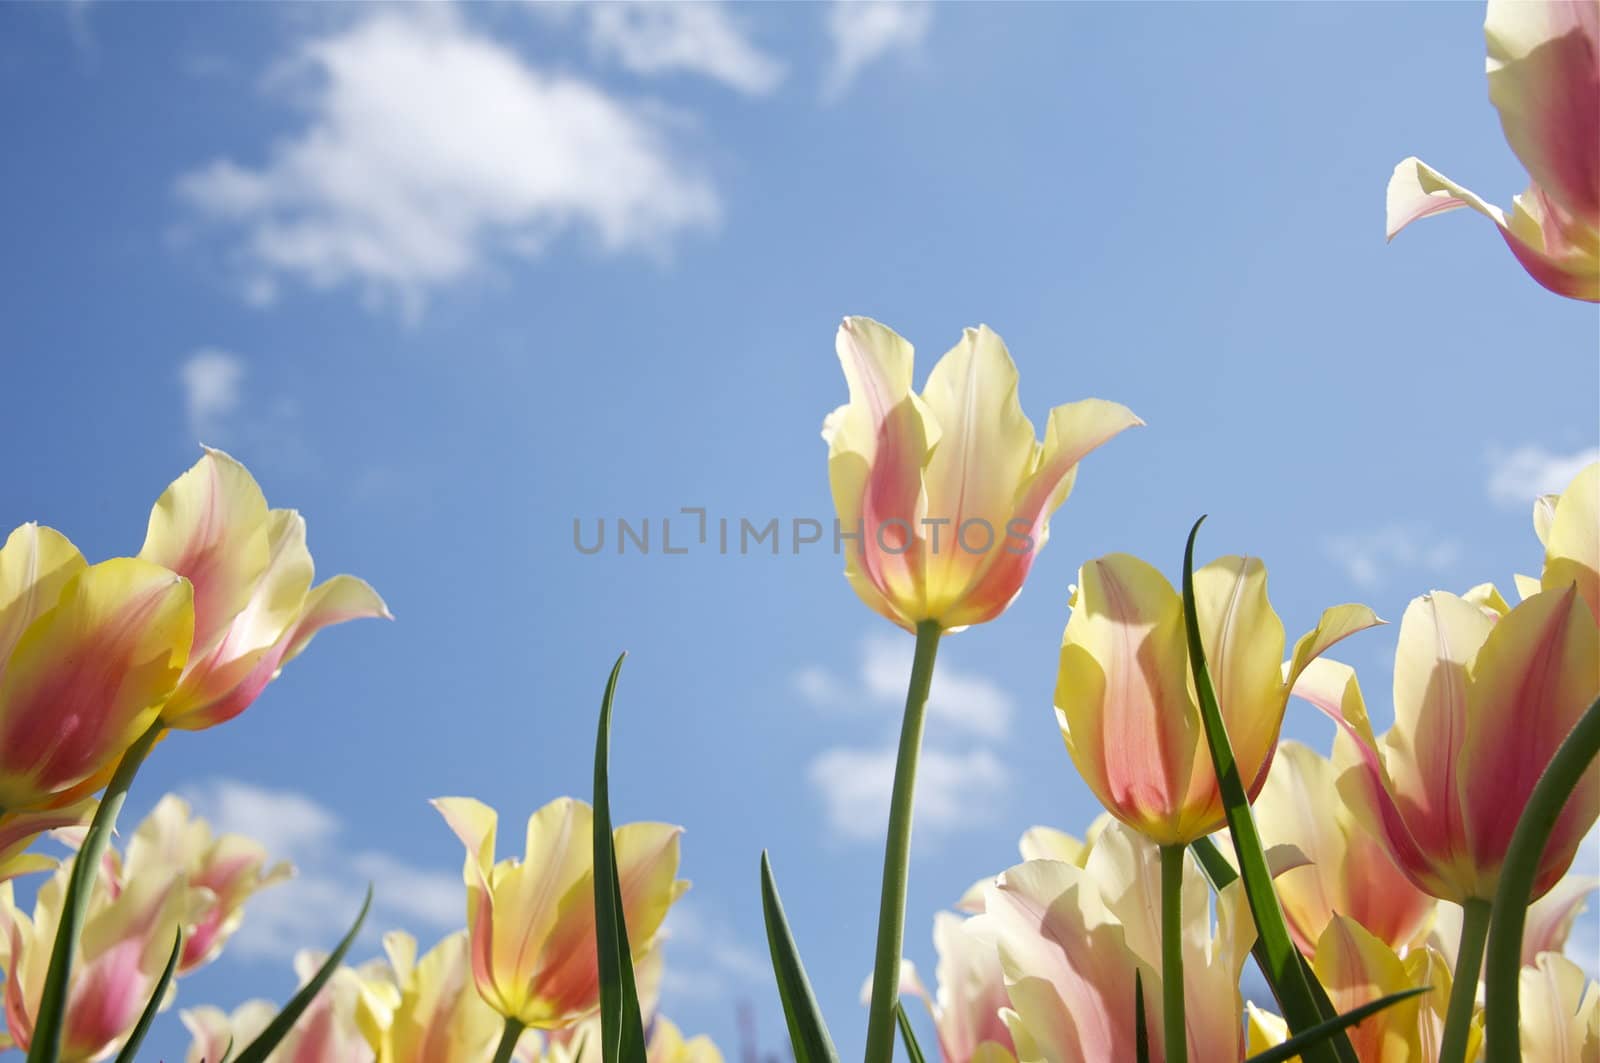 Spring - Fantasy of Tulips by gilmourbto2001